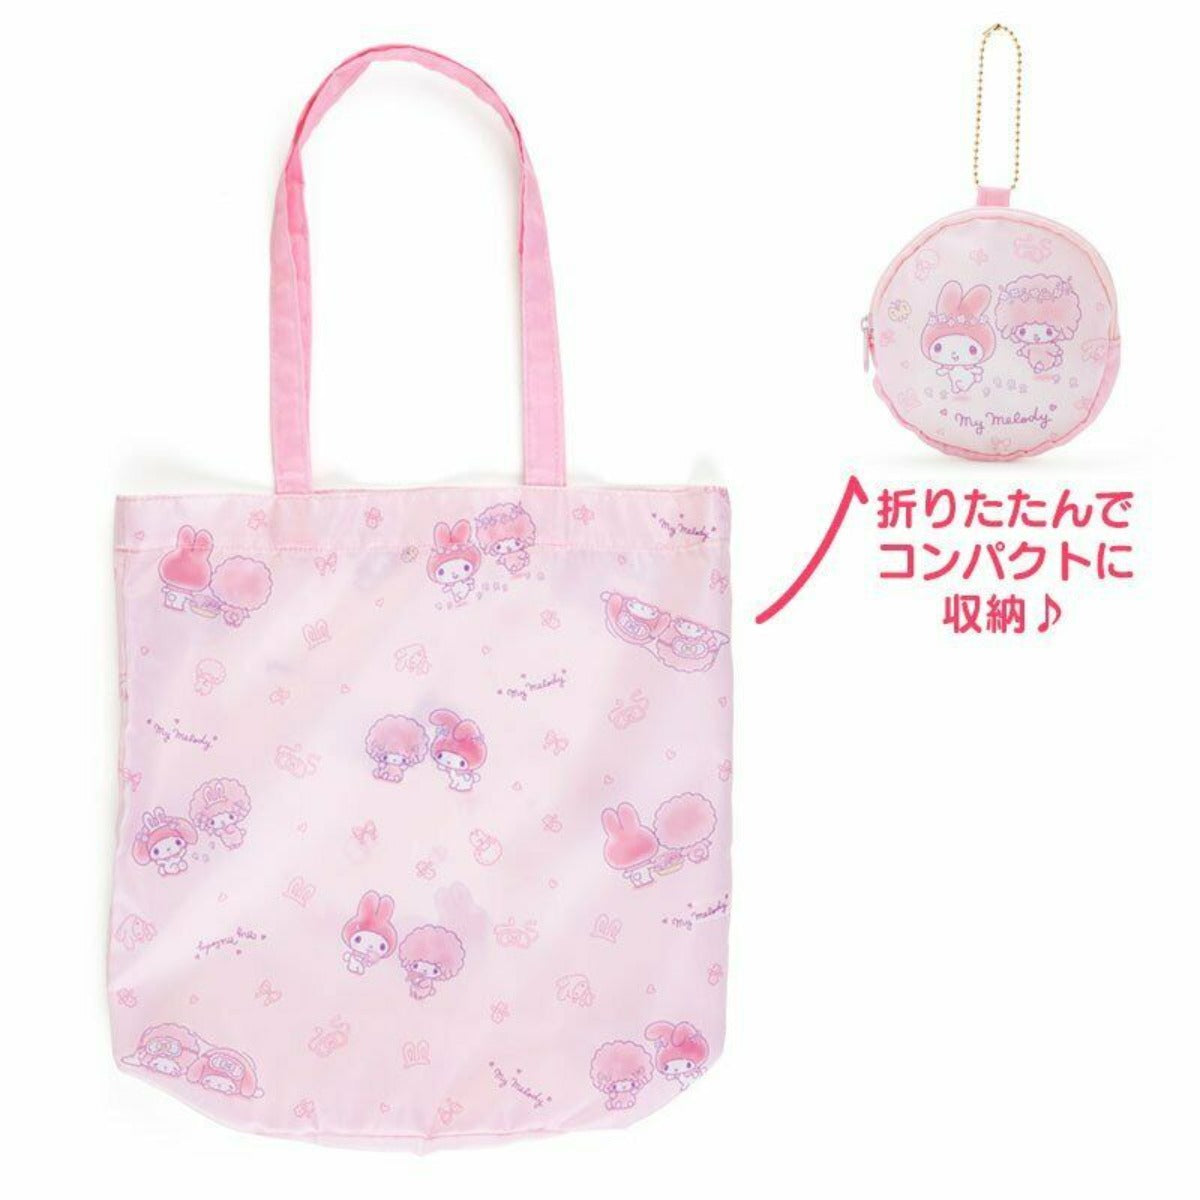 Eco Bag - Sanrio My Melody & Friend 30x30cm Pink (Japan Edition)